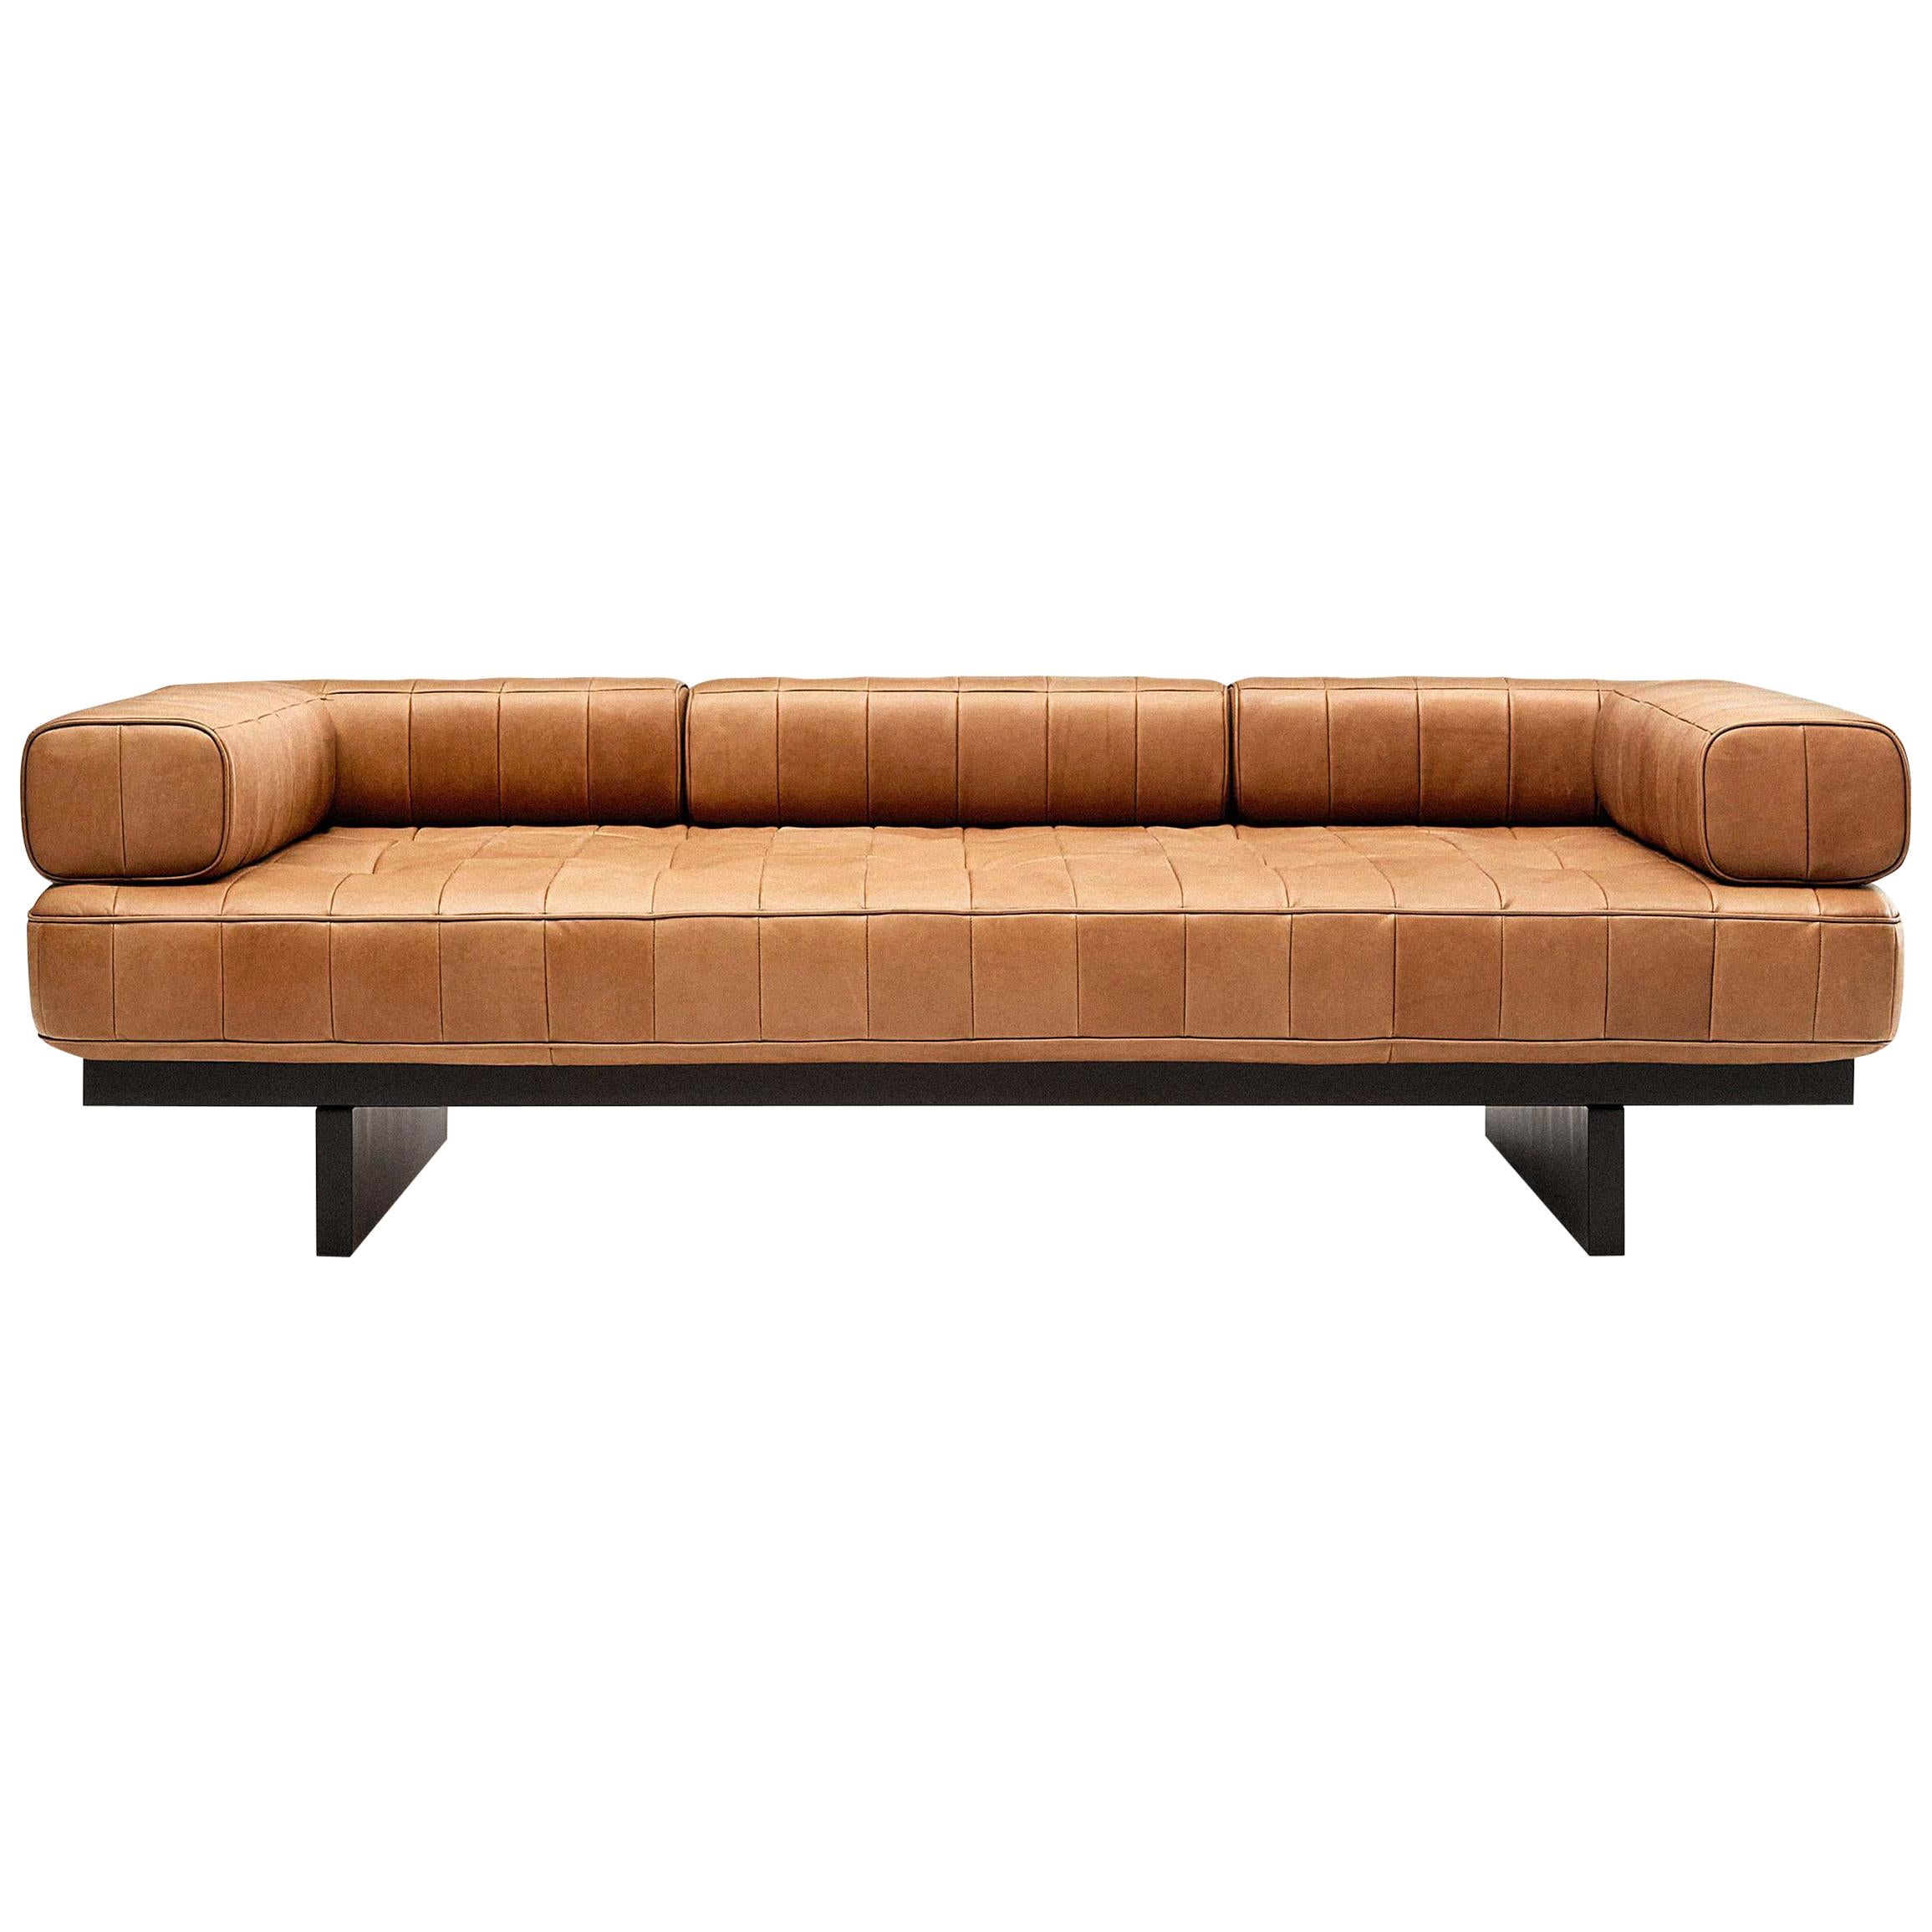 De Sede DS 80 Dreisitziges Sofa mit Nougat-Polsterung von De Sede Design Team